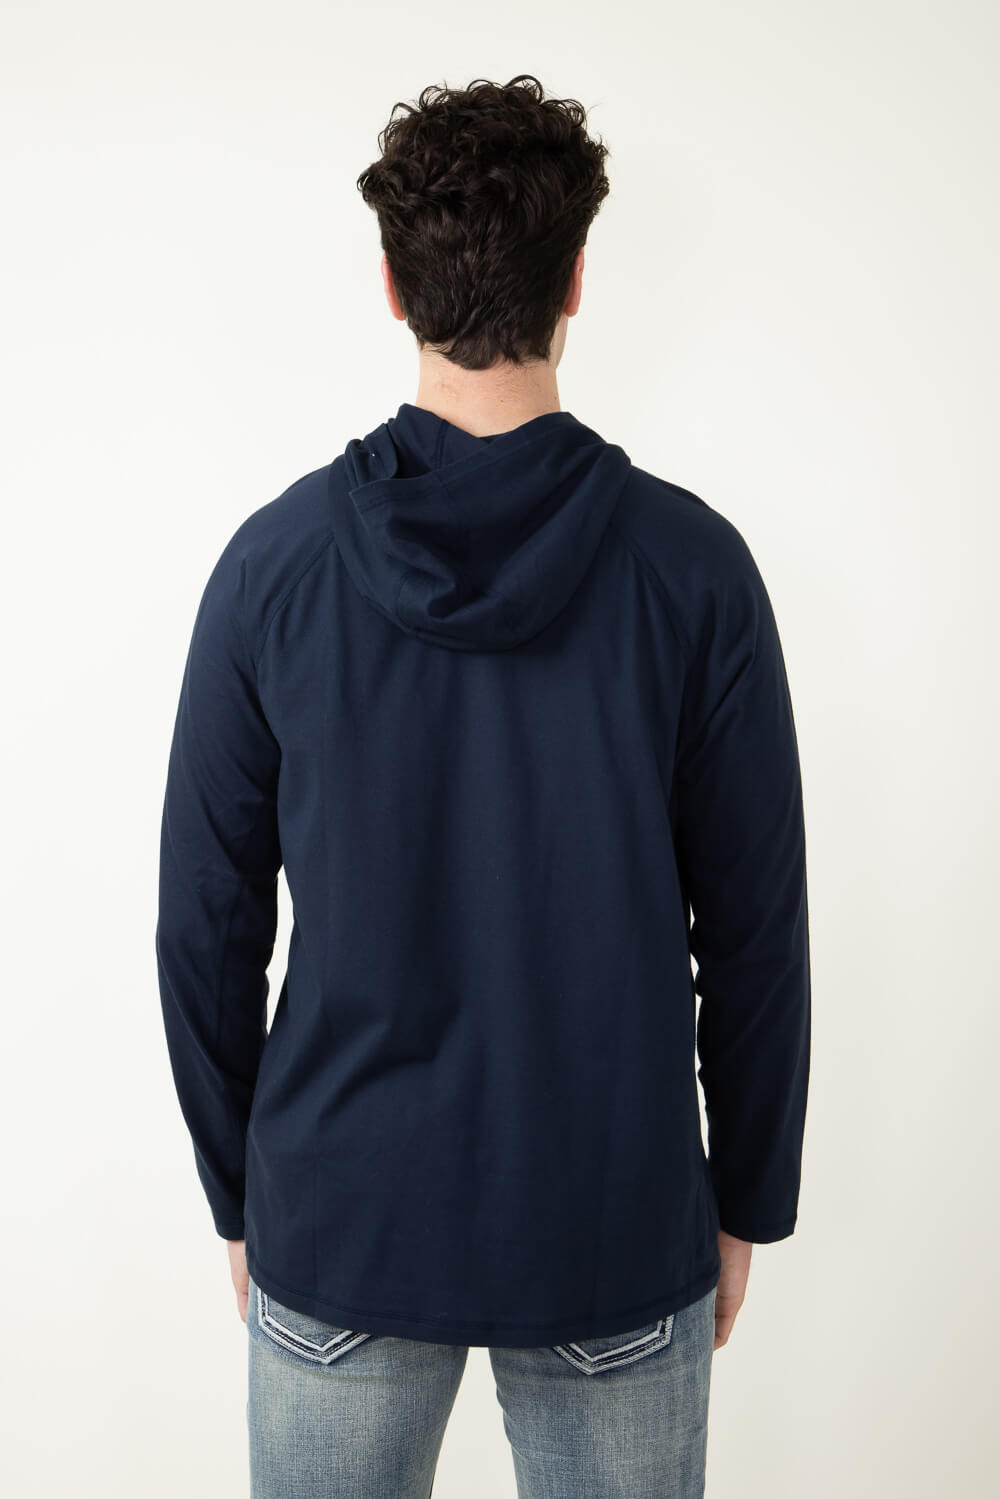 Carhartt Force Long Sleeve Logo Hooded T-Shirt for Men in Navy Blue